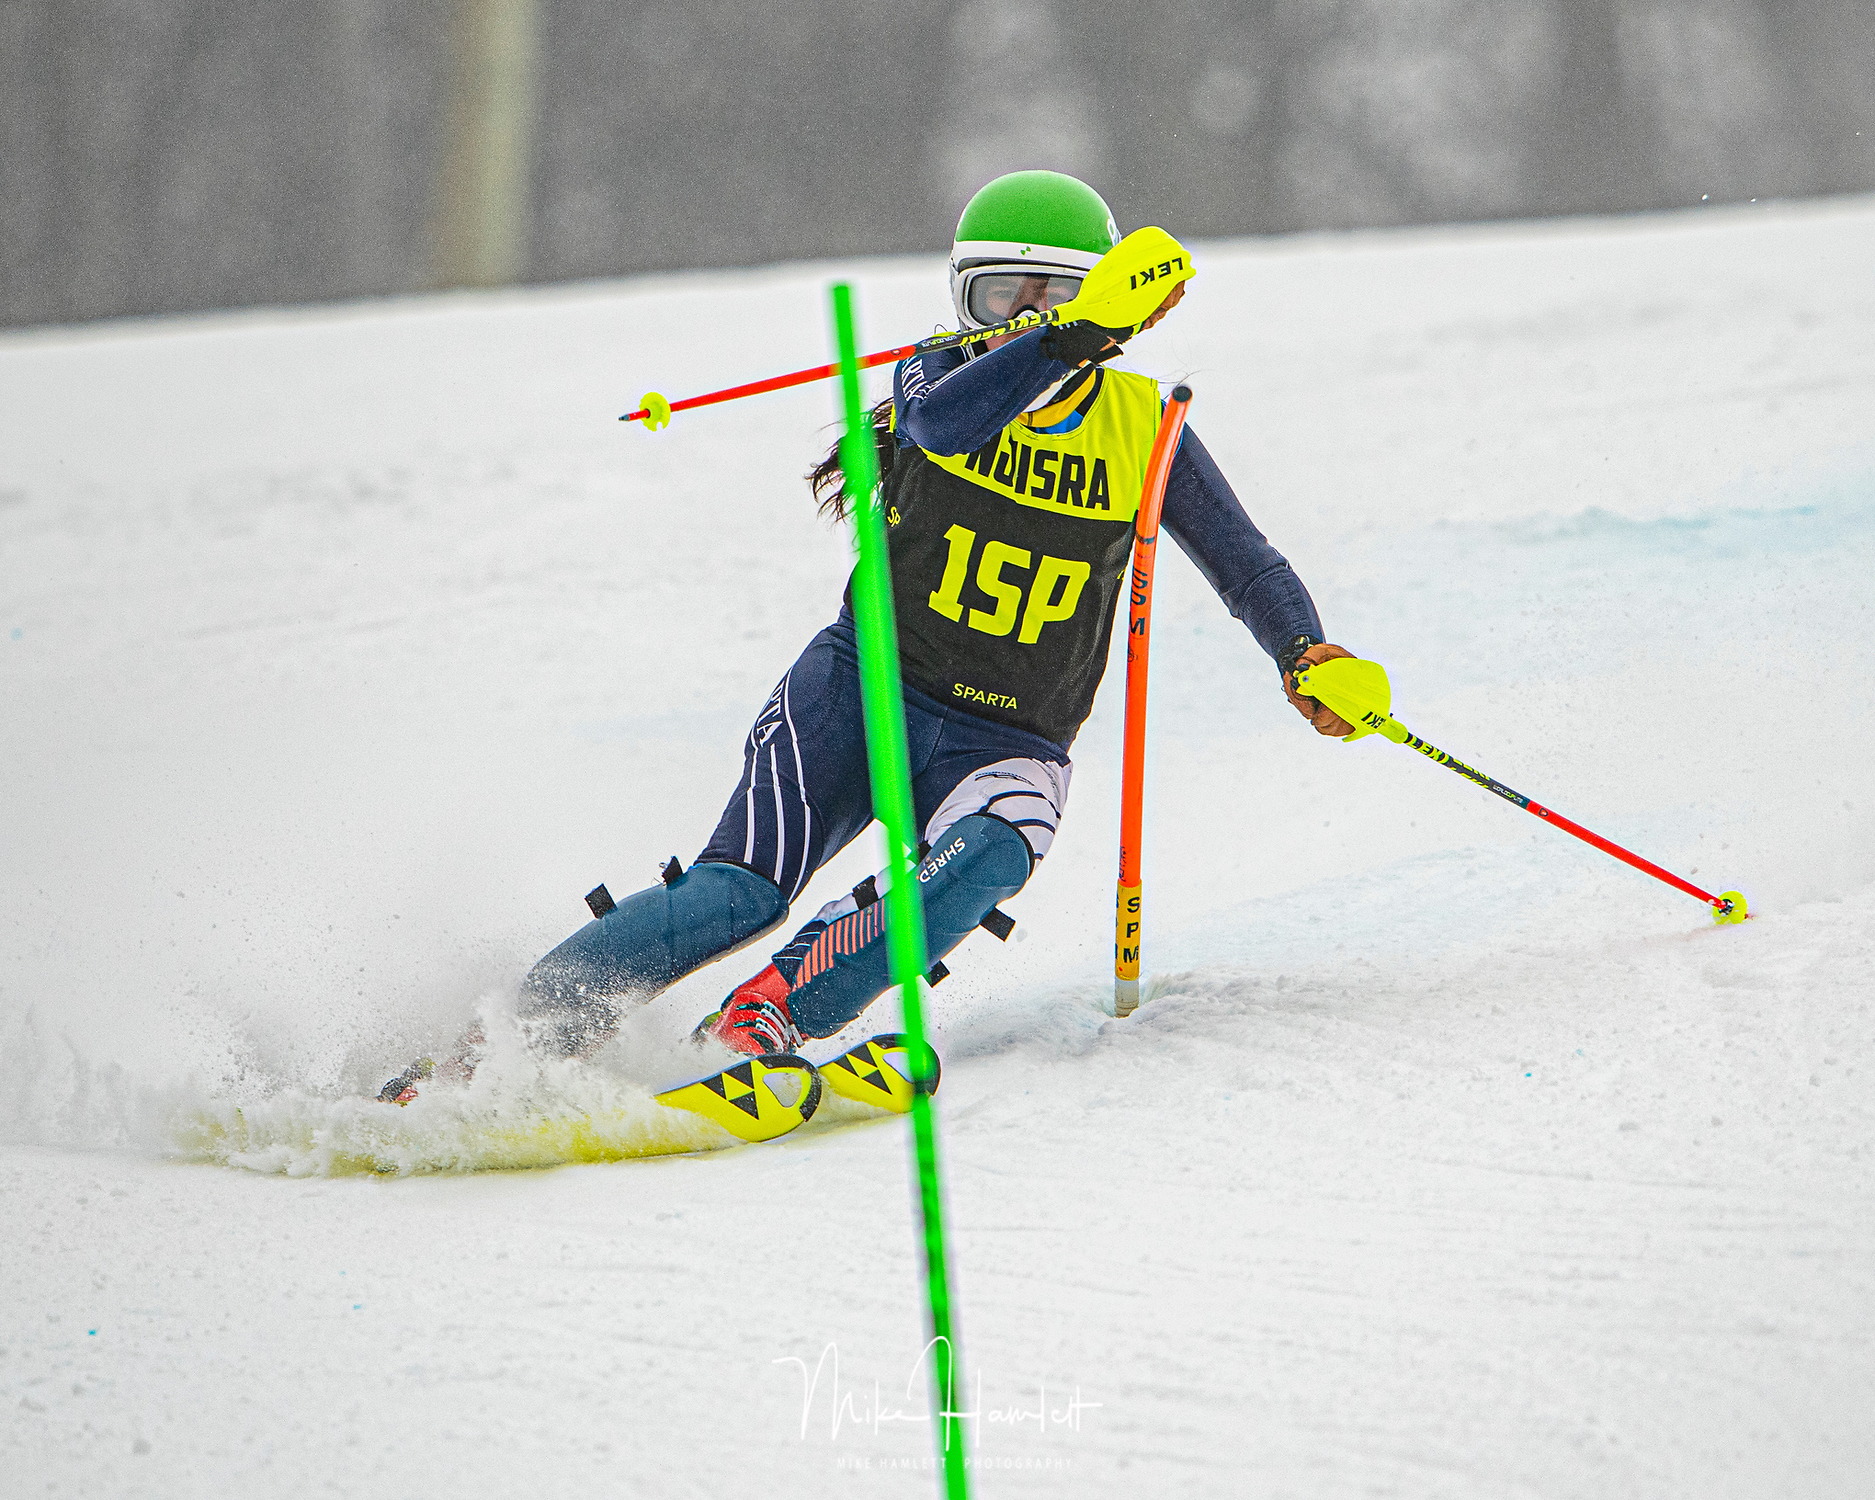 Claudia Calafati - Slalom States | Photo Credit: Mike Hamlett